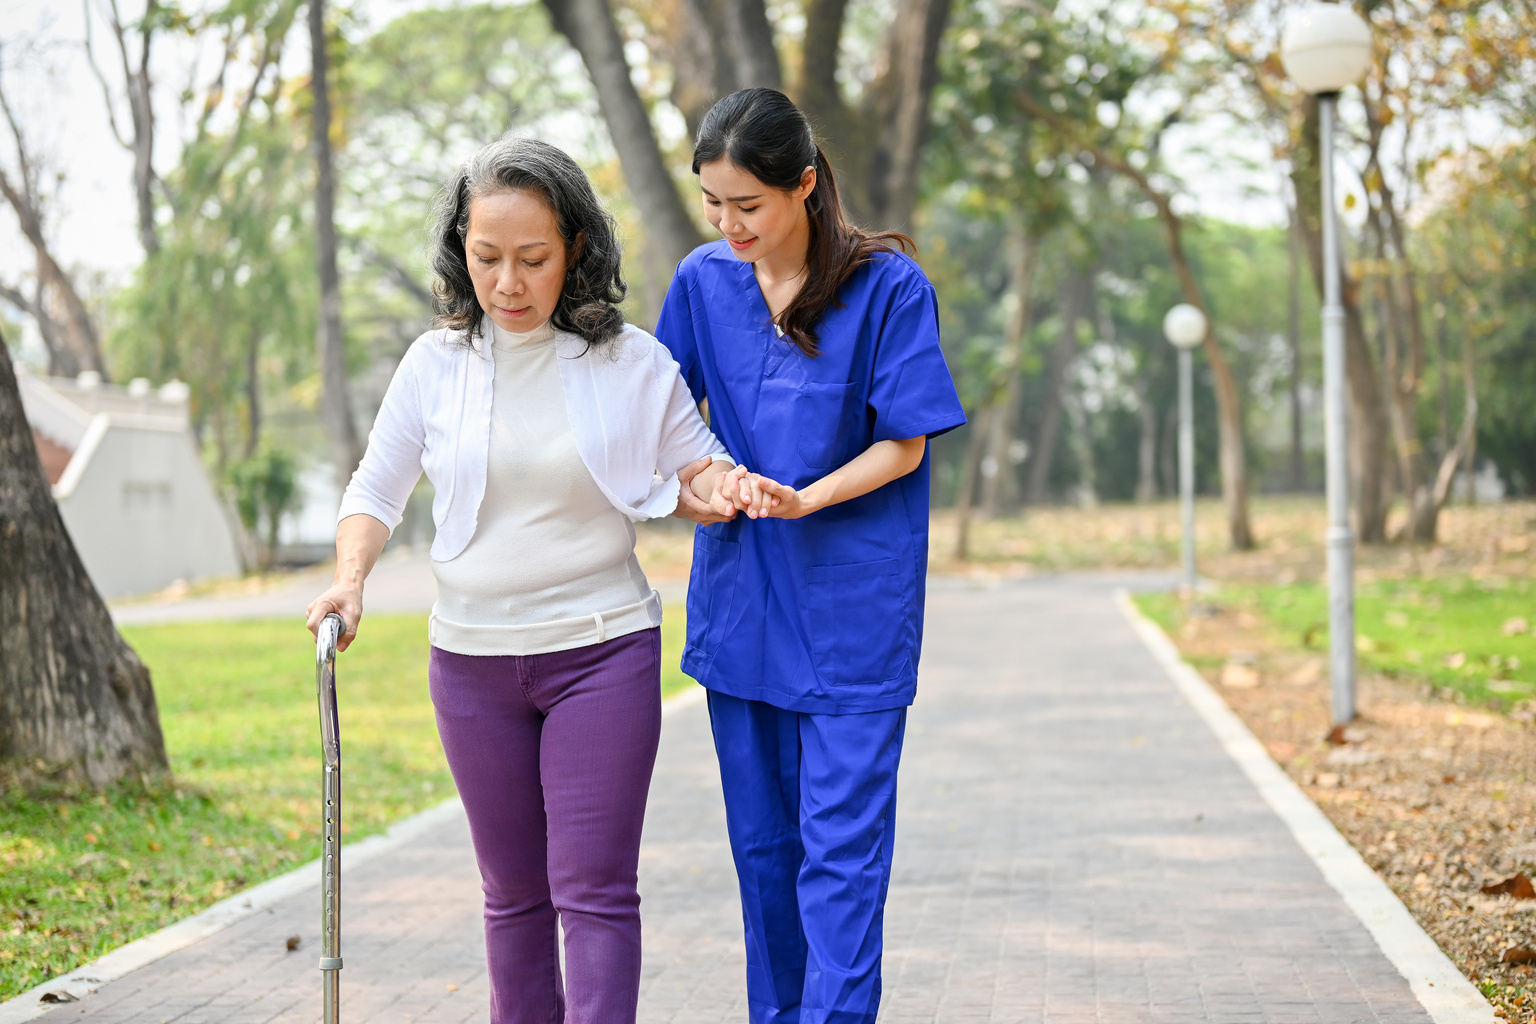 Certified nursing assistant helps patient down a walkway